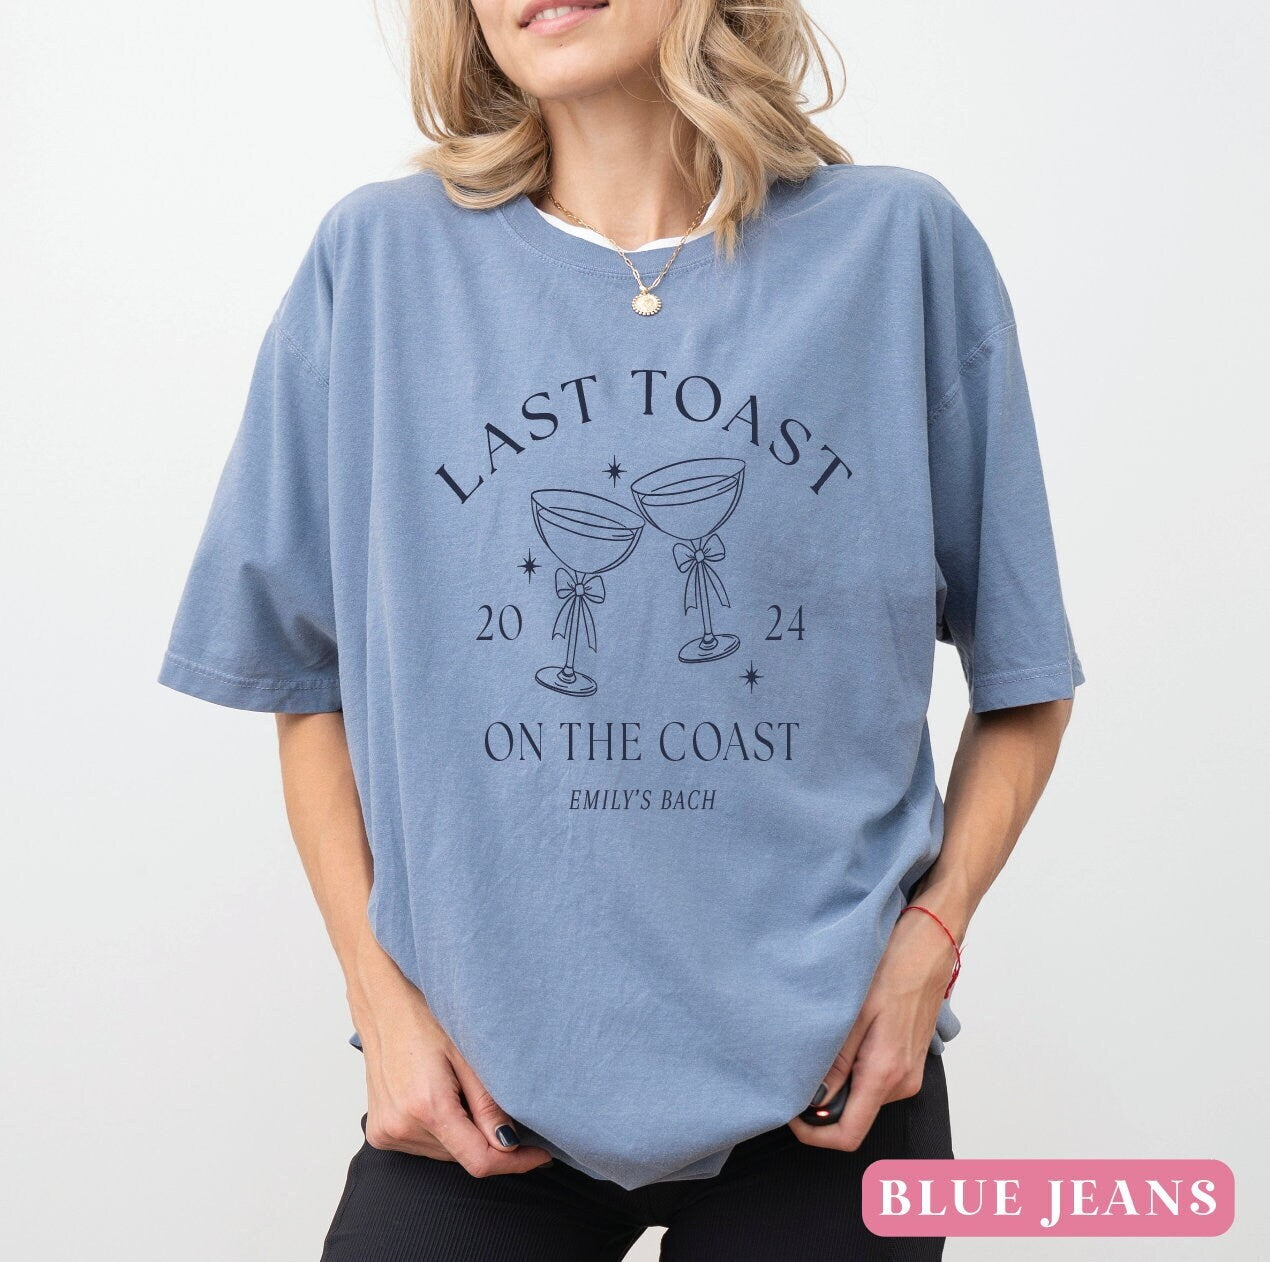 Last Toast on the Coast Bachelorette T-Shirt - Bachelorette Party Shirts, Luxury Shirts, 1717 Comfort Colors, Custom Bachelorette Shirts